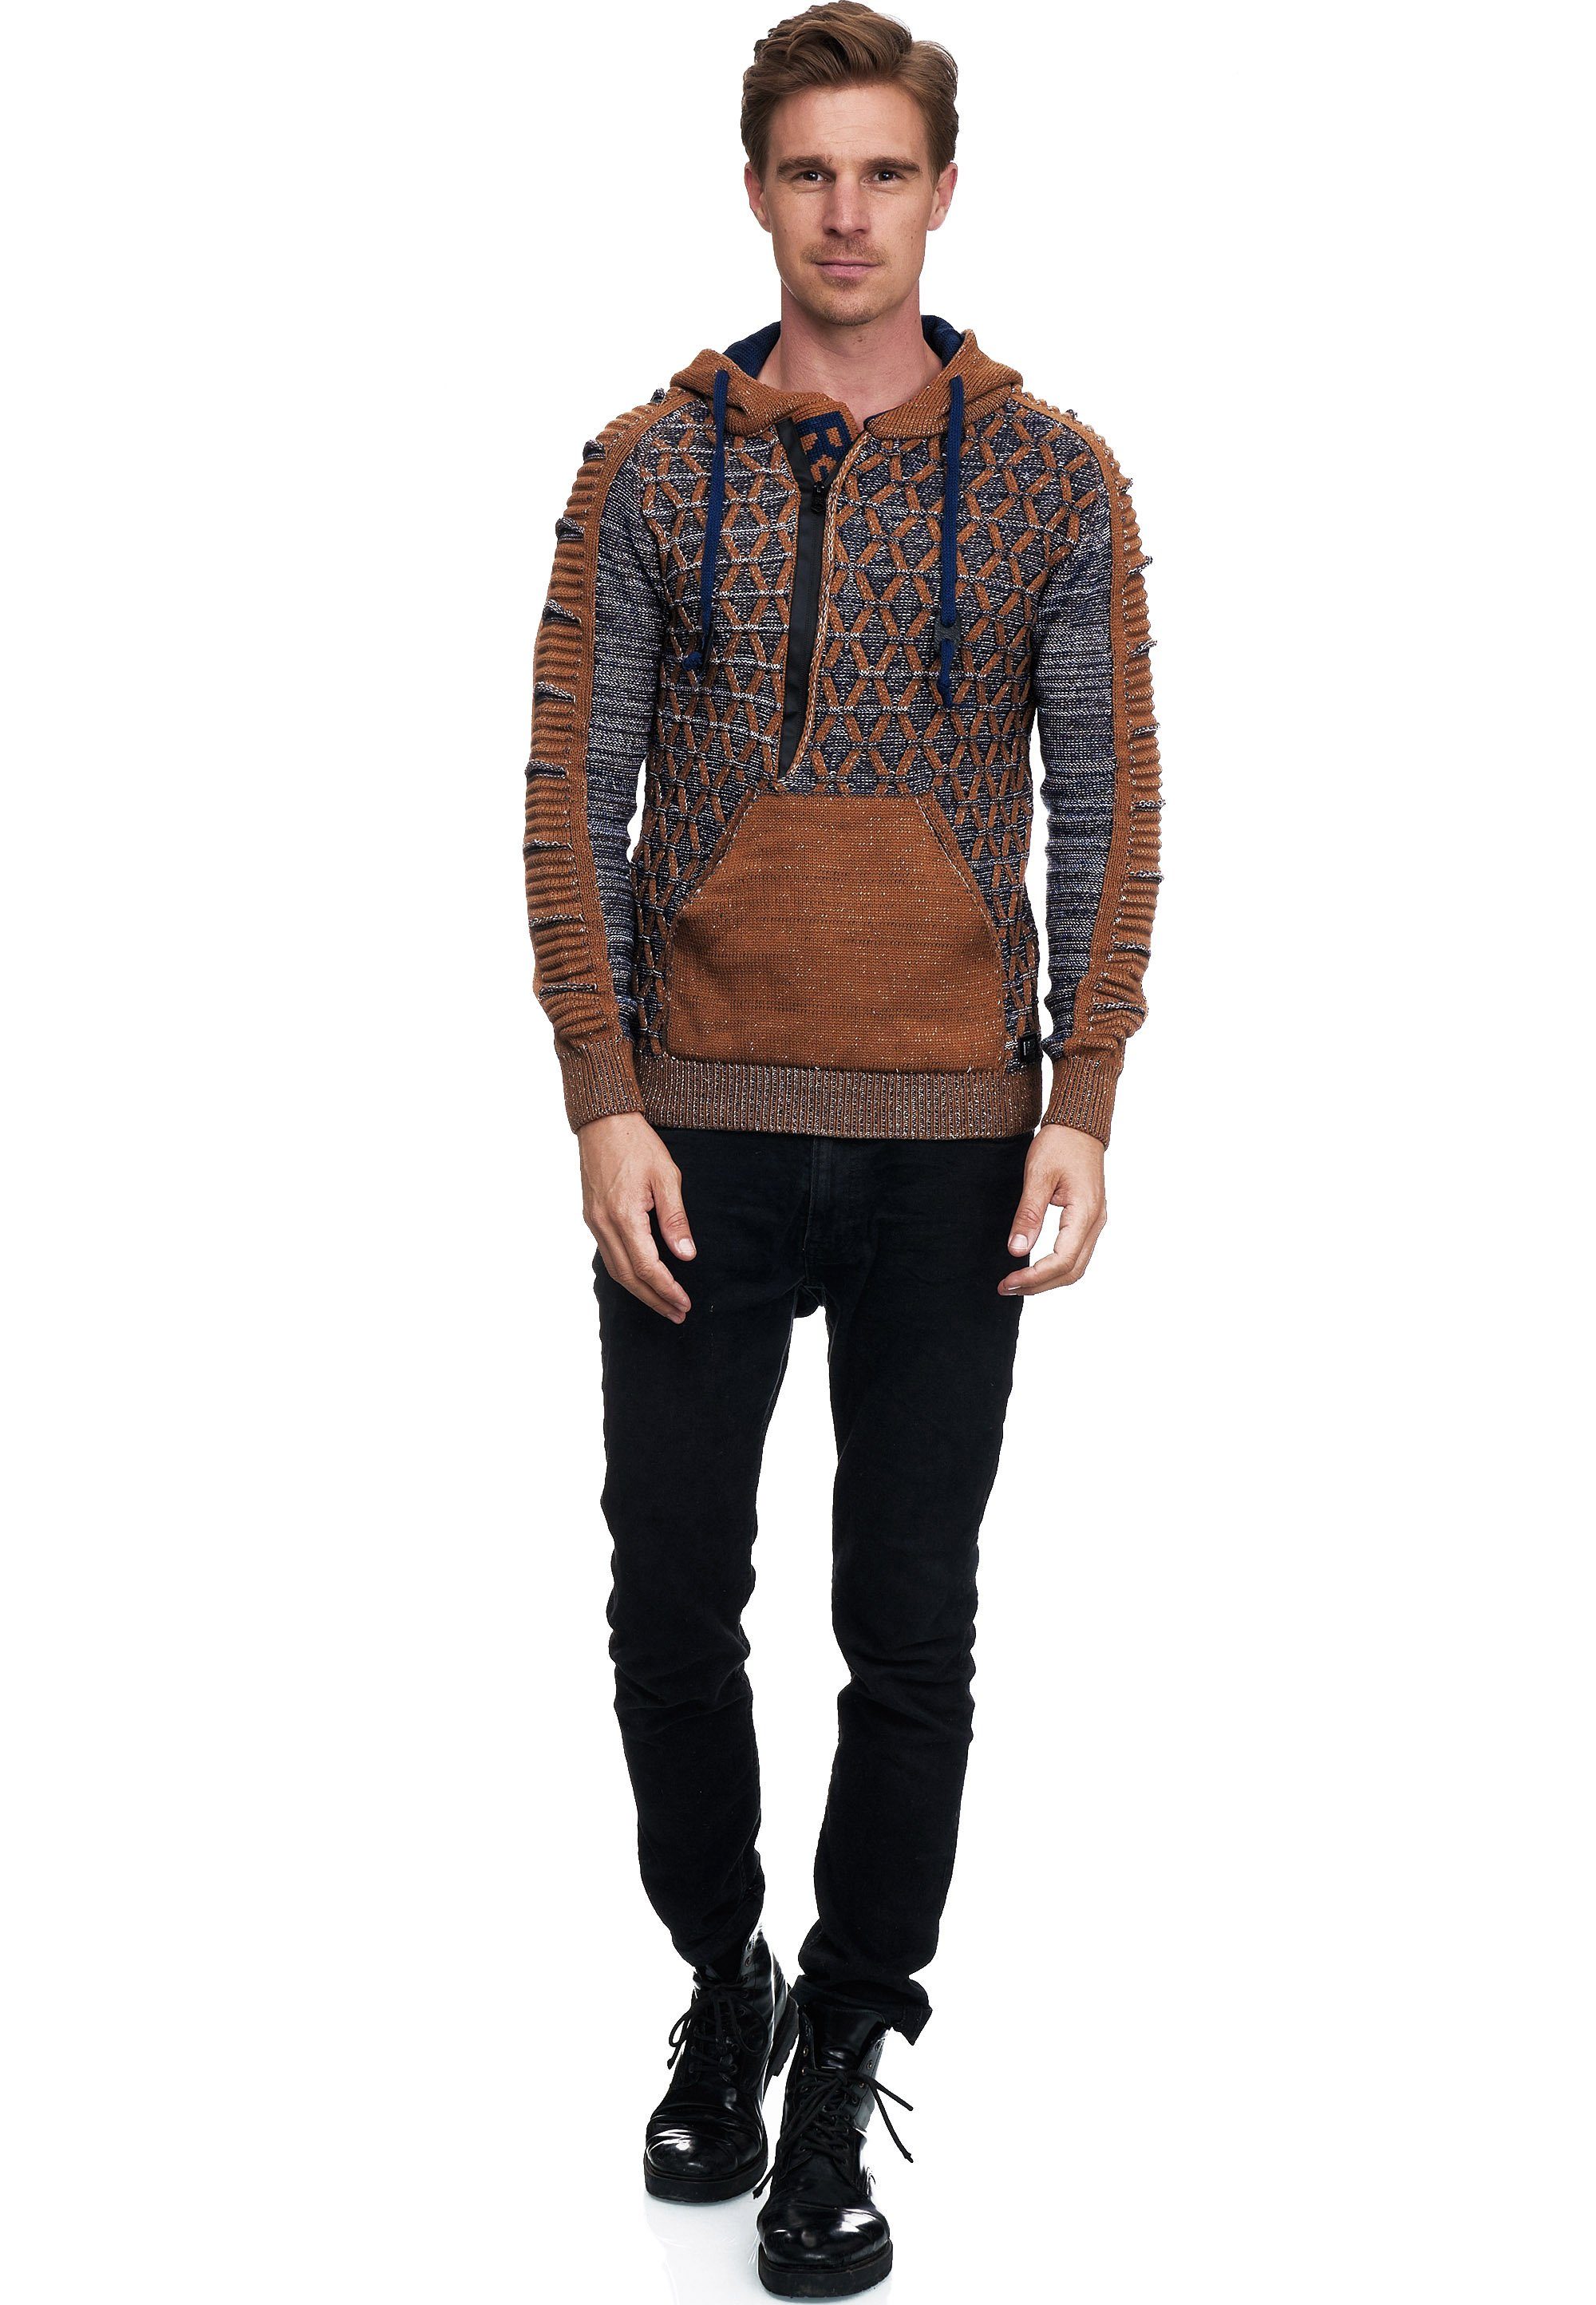 Rusty Neal Kapuzensweatshirt in ausgefallenem Design braun-grau